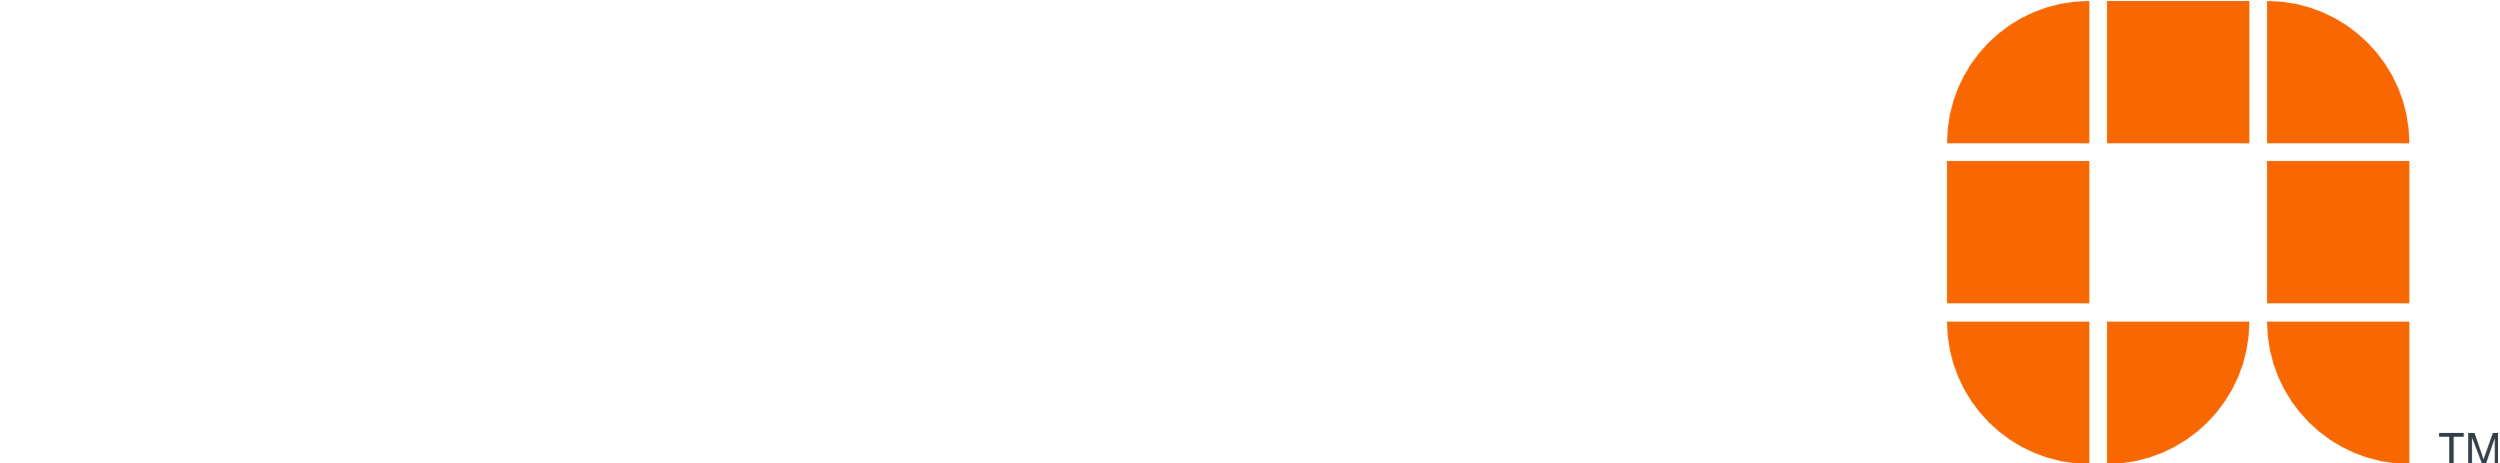 Allegion plc logo